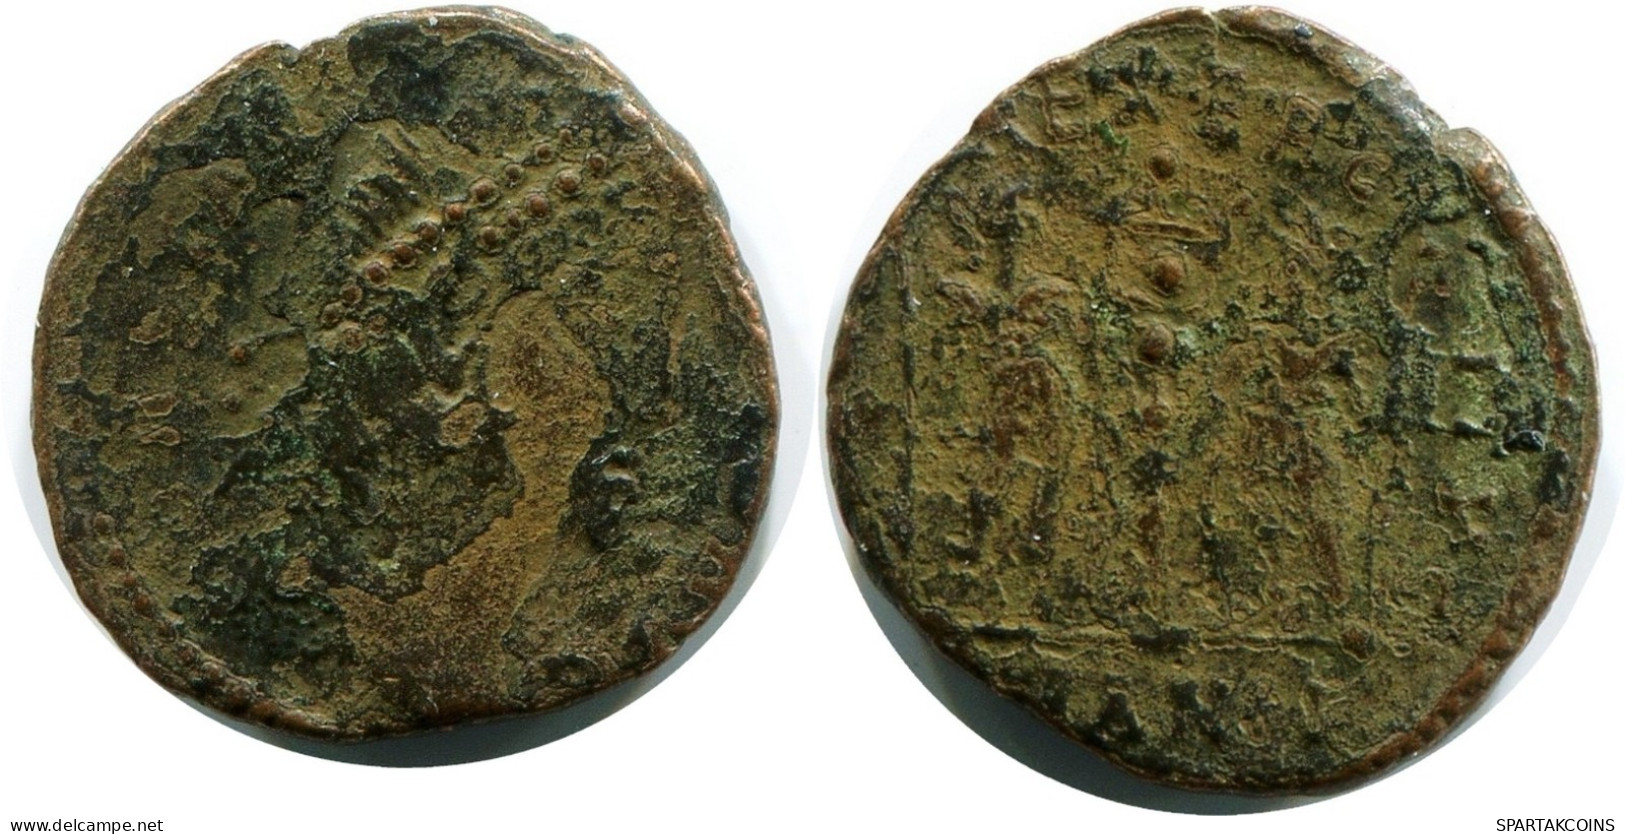 ROMAN Coin MINTED IN ANTIOCH FOUND IN IHNASYAH HOARD EGYPT #ANC11290.14.D.A - L'Empire Chrétien (307 à 363)